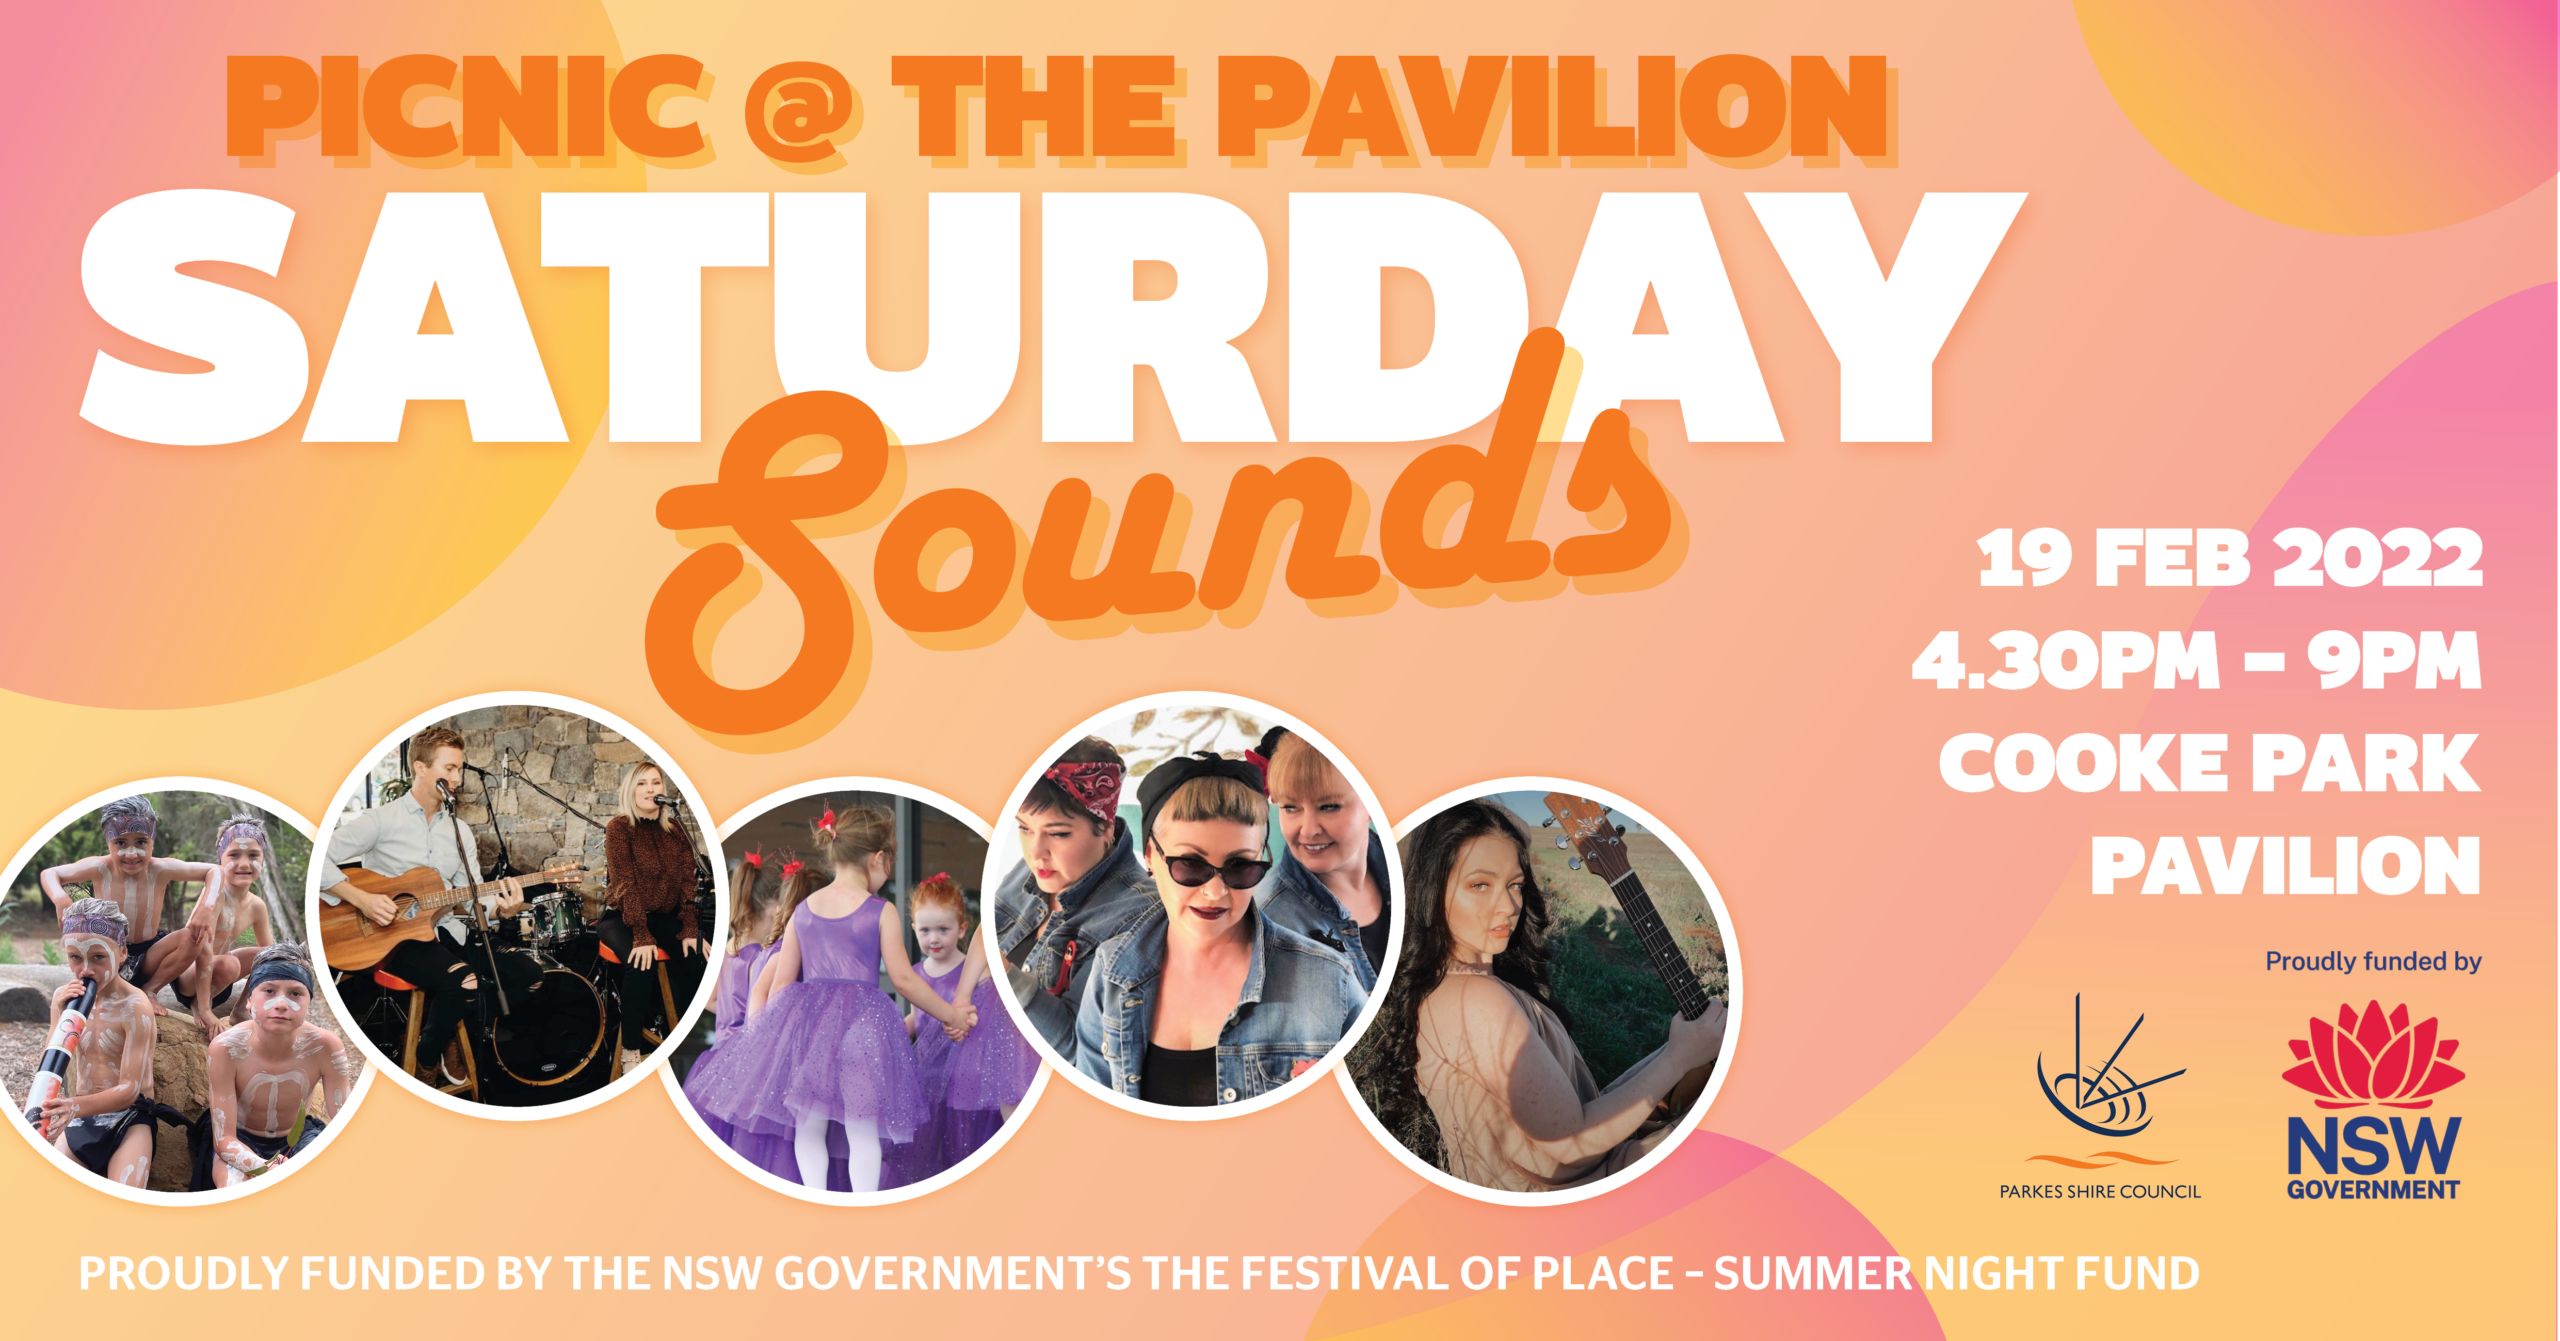 Saturday Sounds Picnic at the Pavilion